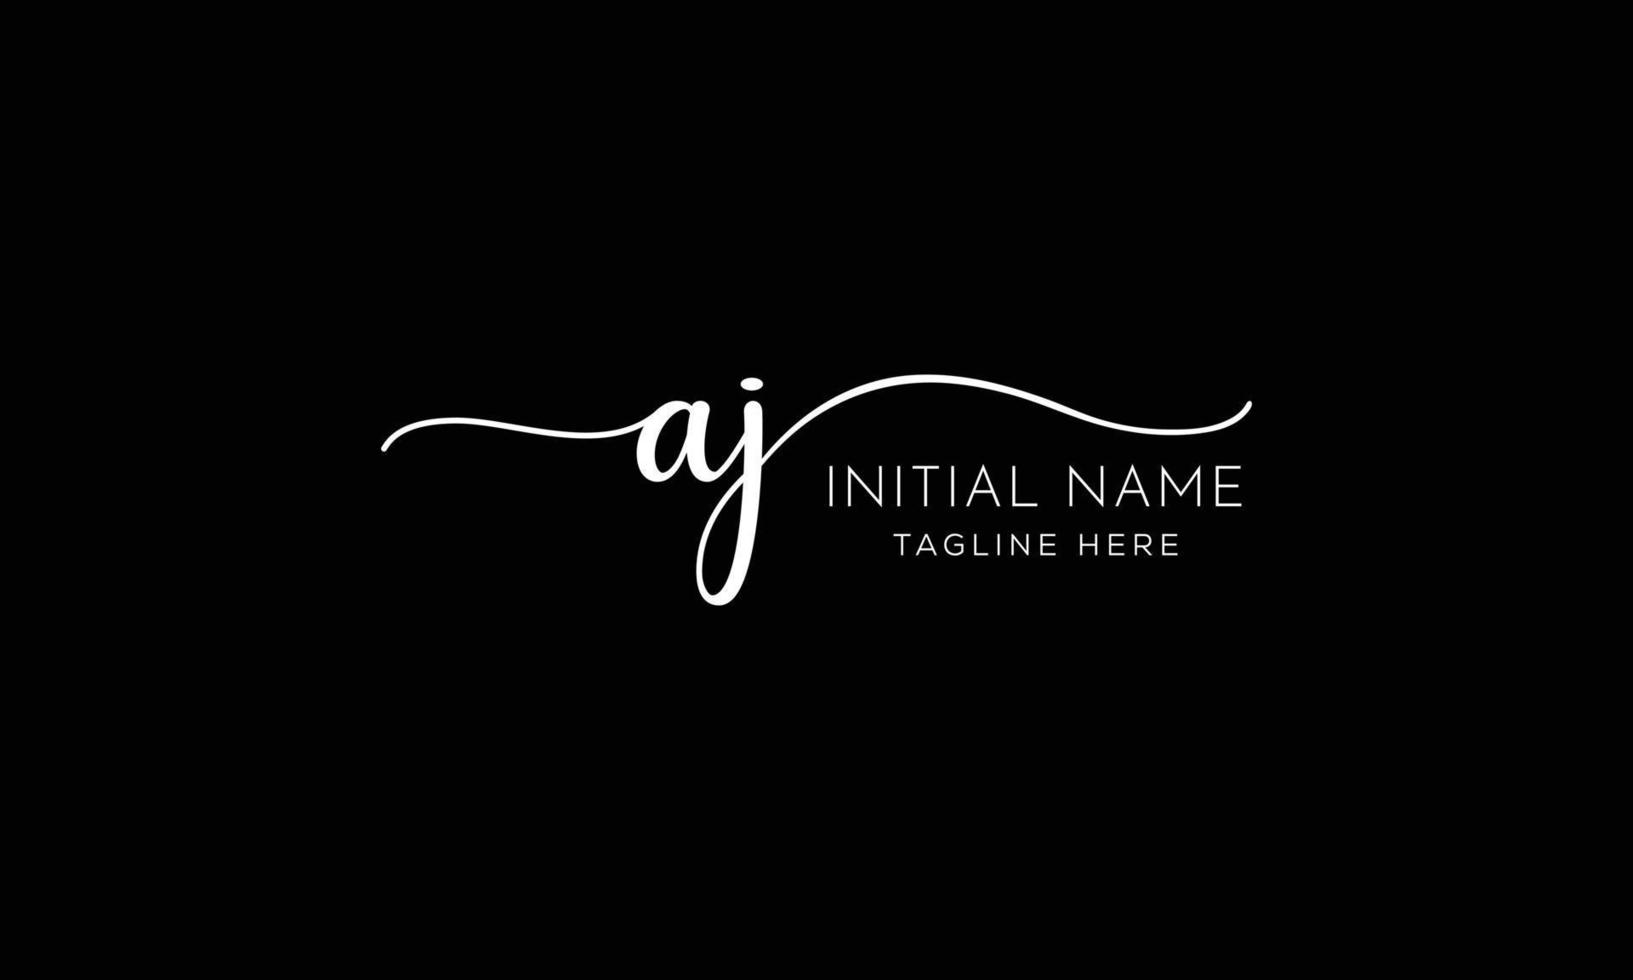 AJ J A initial signature logo template vector